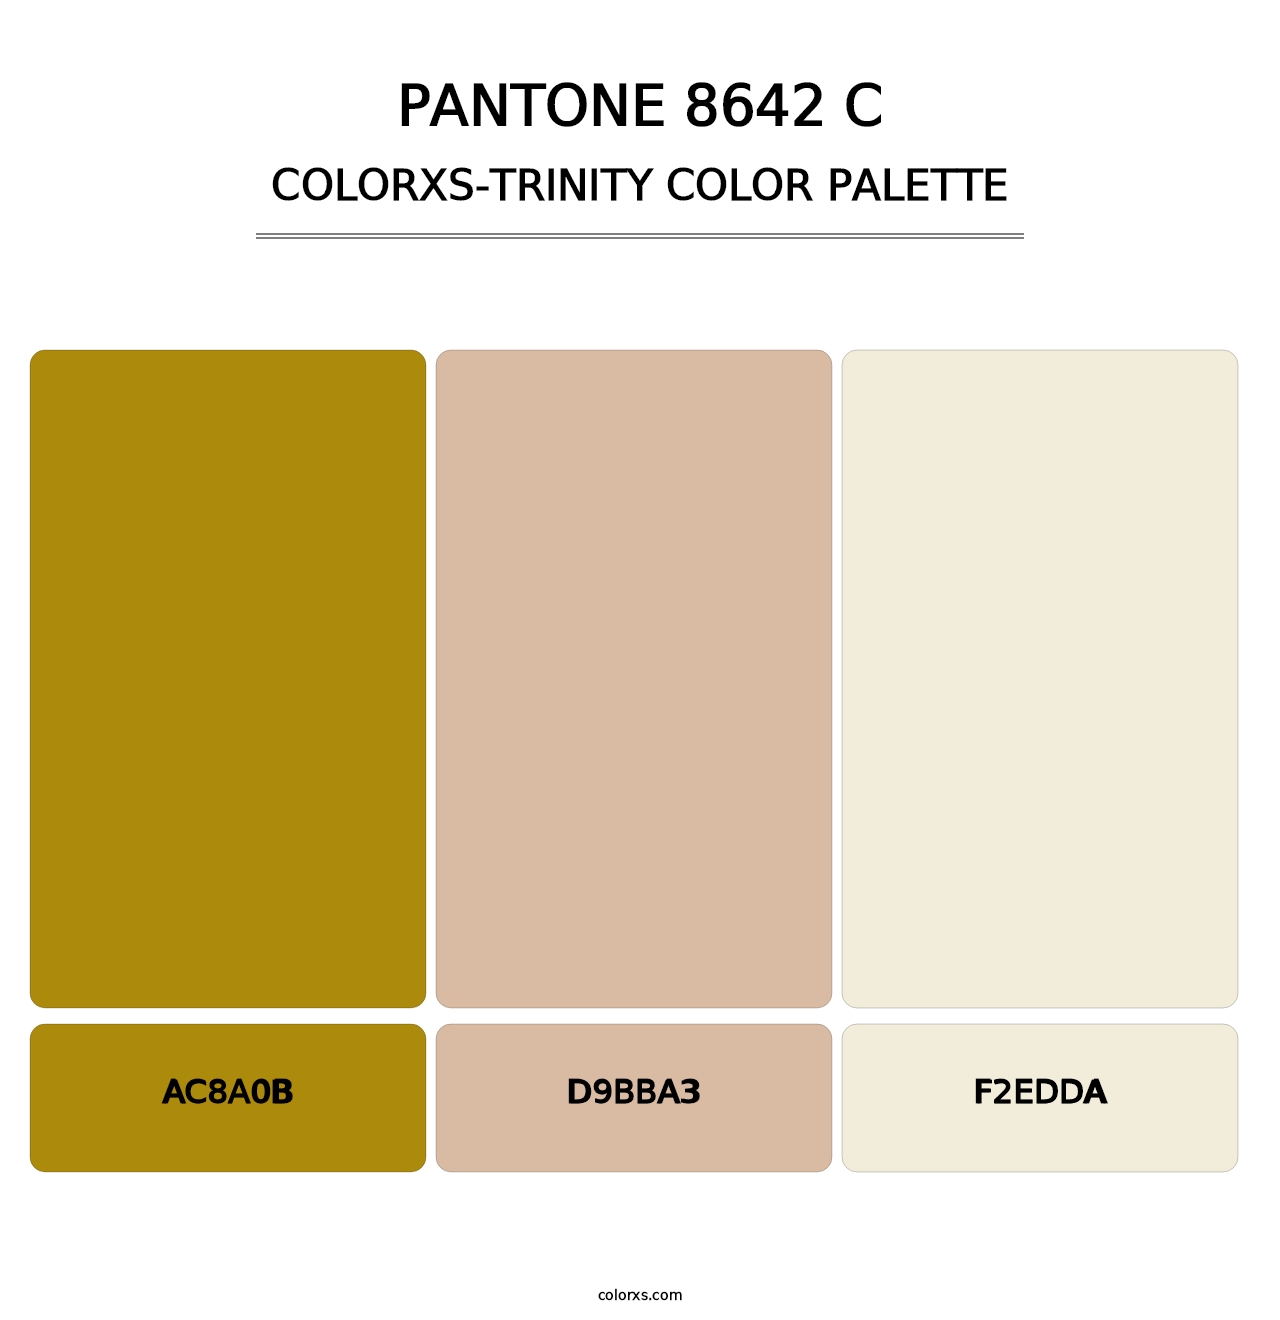 PANTONE 8642 C - Colorxs Trinity Palette